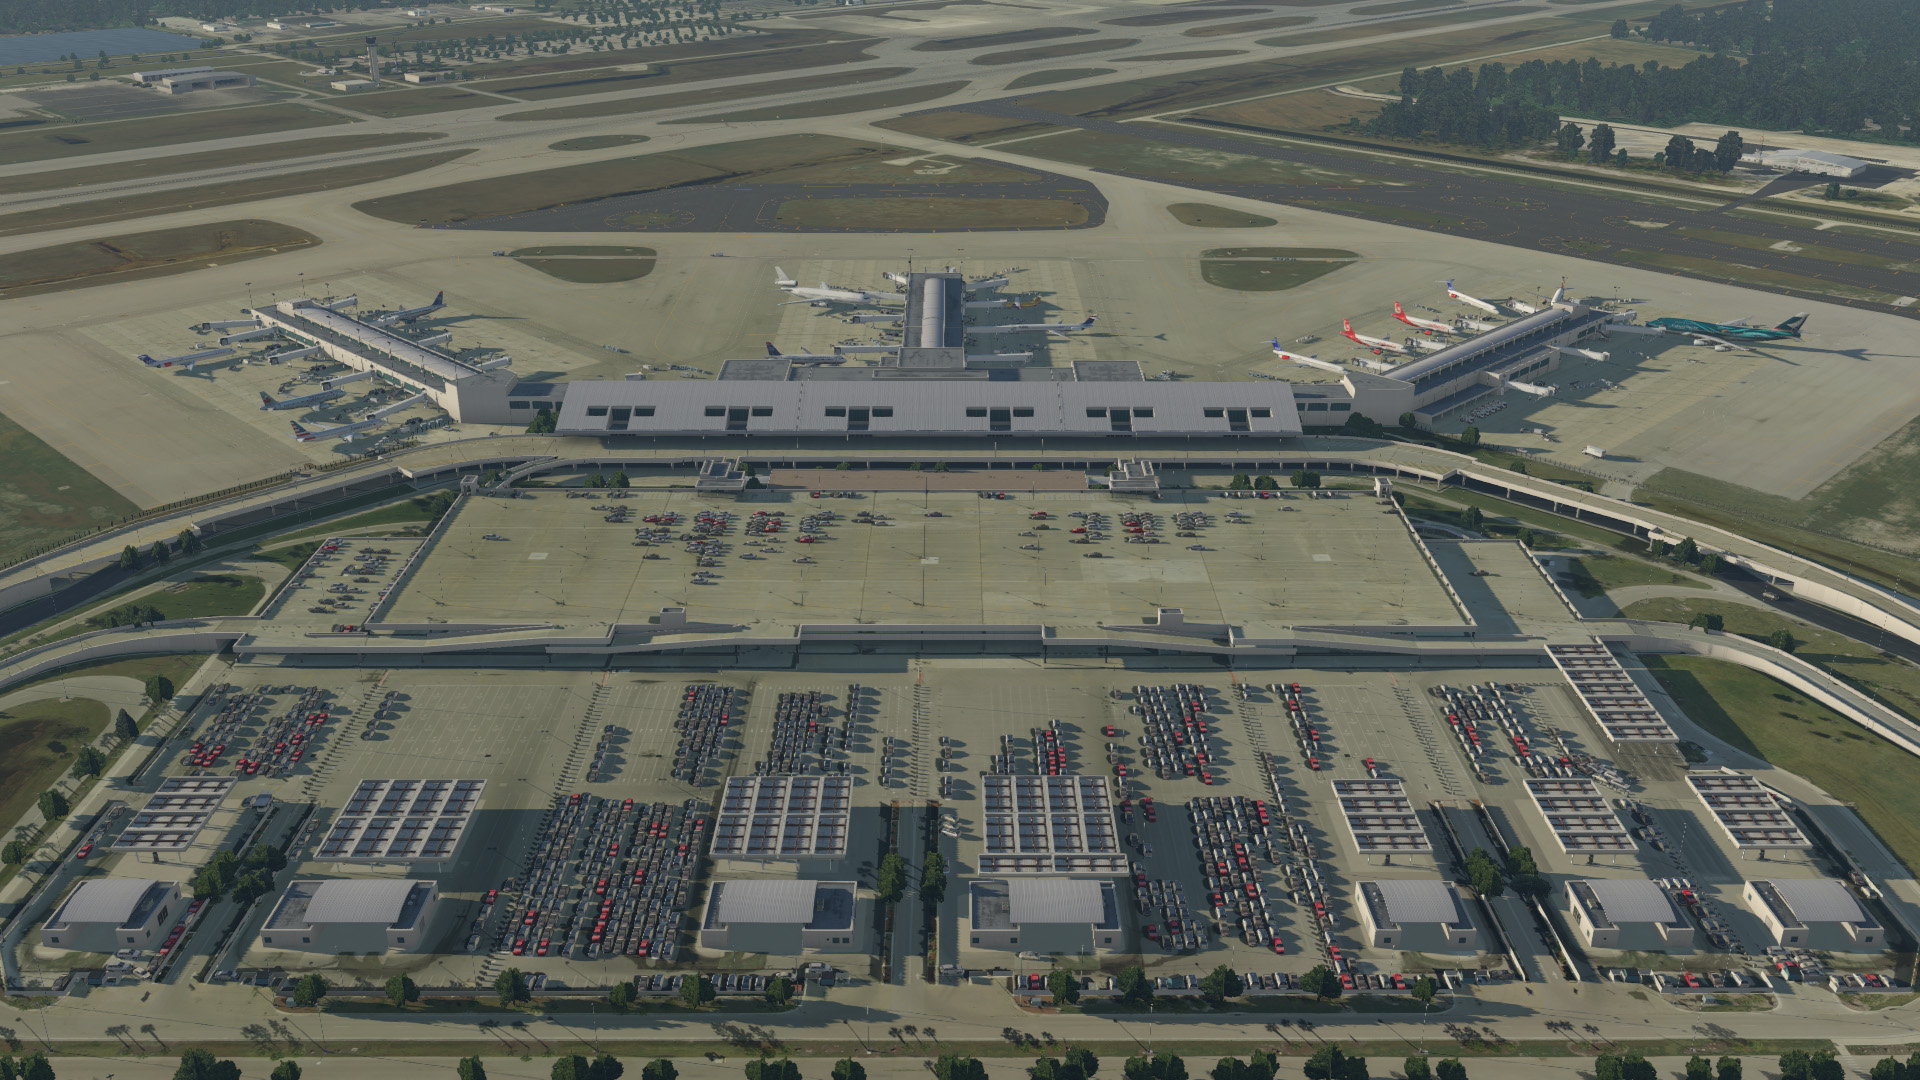 X-Plane 11 - Add-on: Aerosoft - Airport Southwest Florida Intl. on Steam